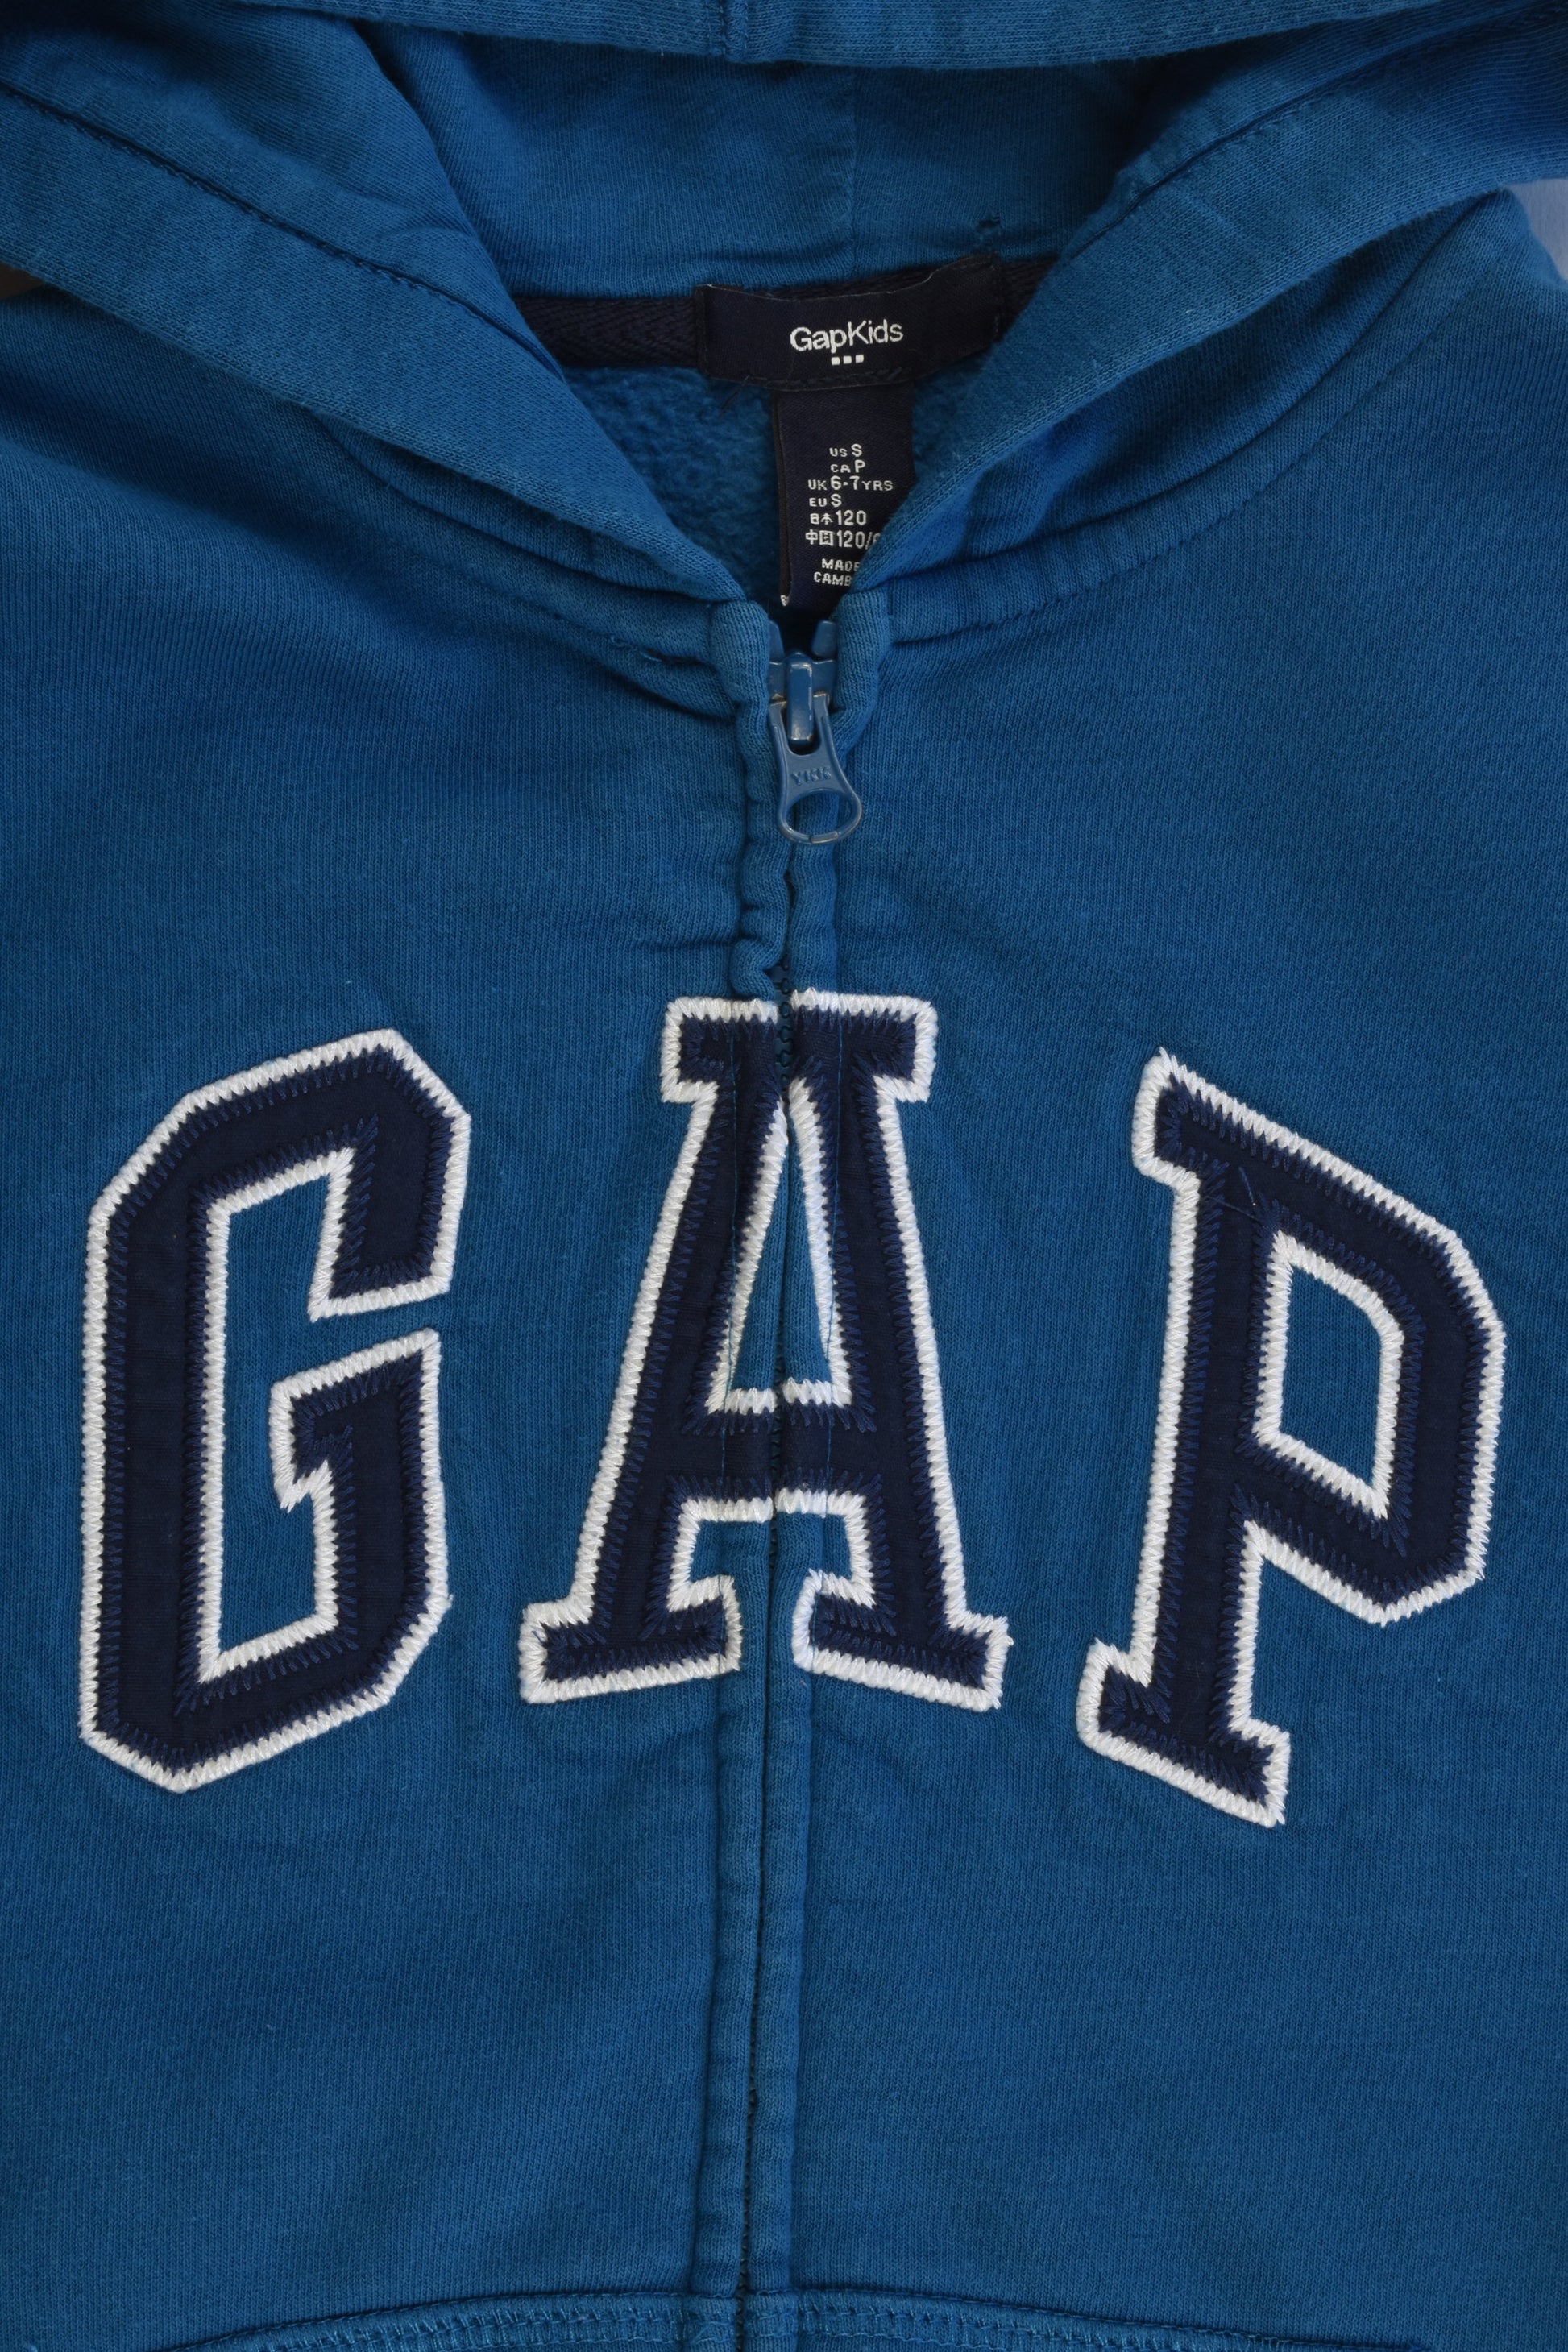 Gap Kids Size 6-7 Hooded Jumper